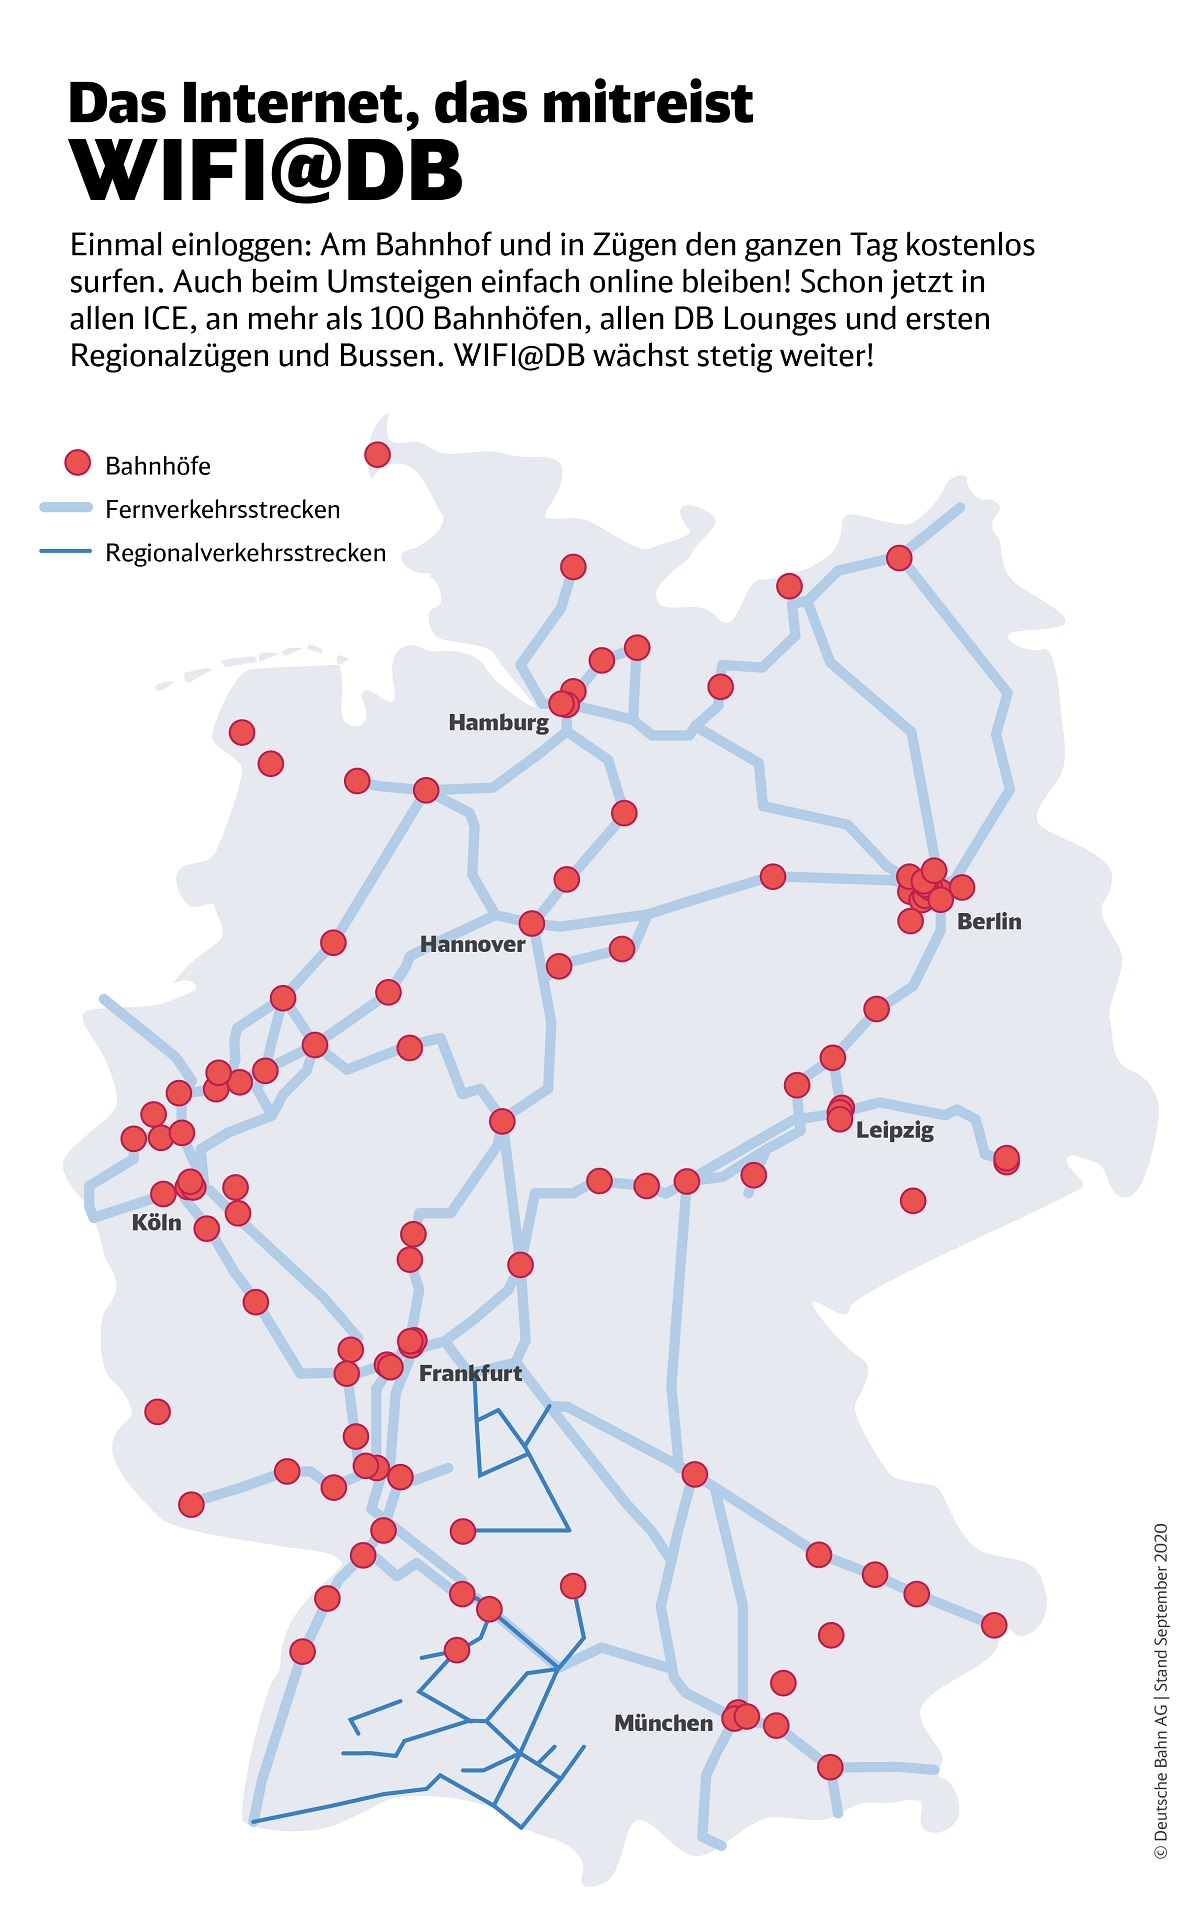 Deutsche Bahn Launches Europe's Largest Rolling WLAN Network - Railway